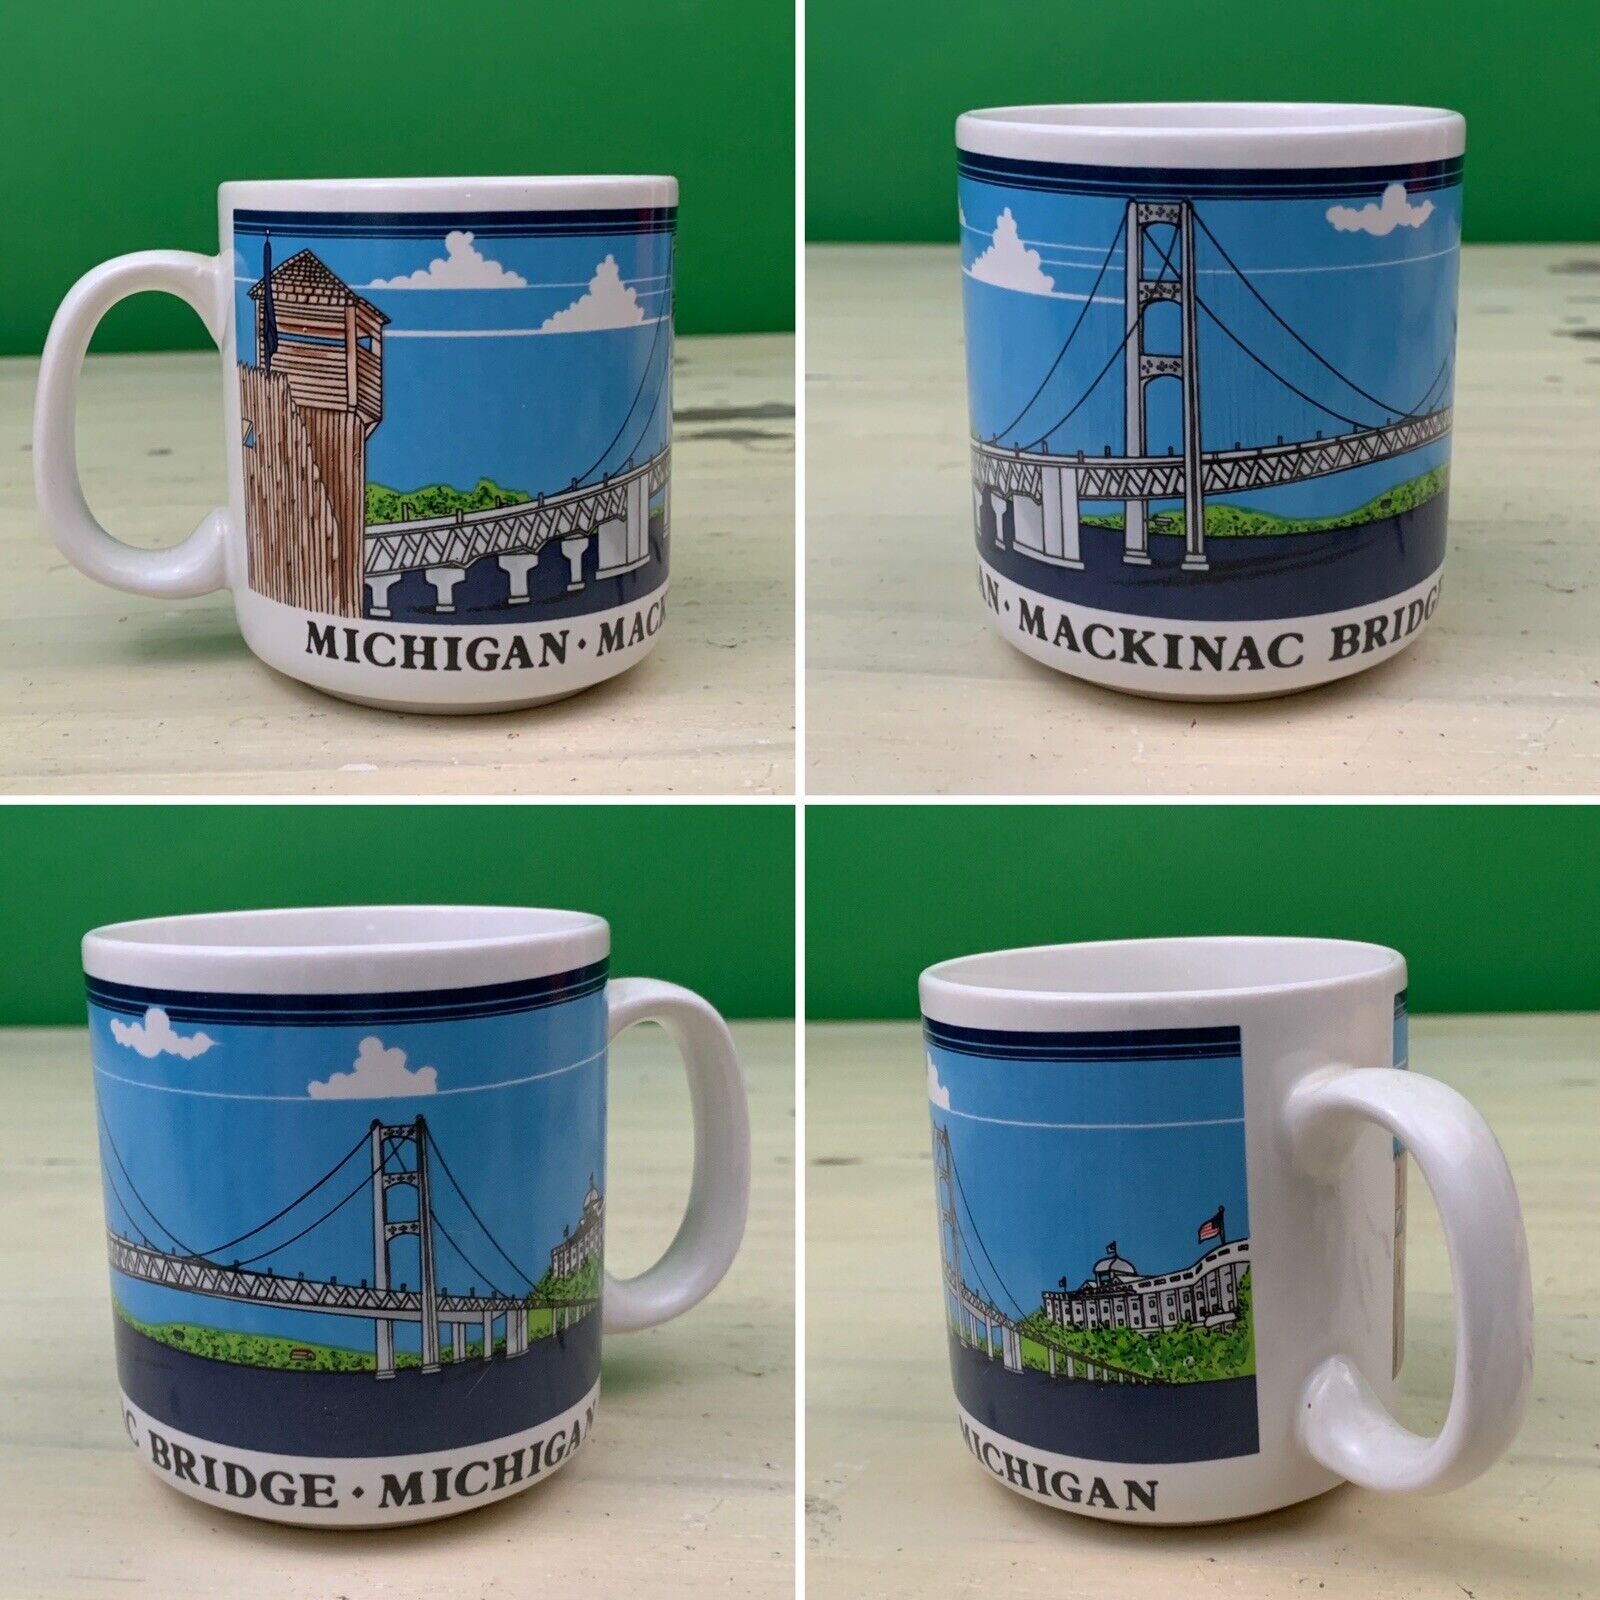 MACKINAC ISLAND BRIDGE MICHIGAN - Vtg 80s-90s White & Blue Glass Mug Coffee Cup